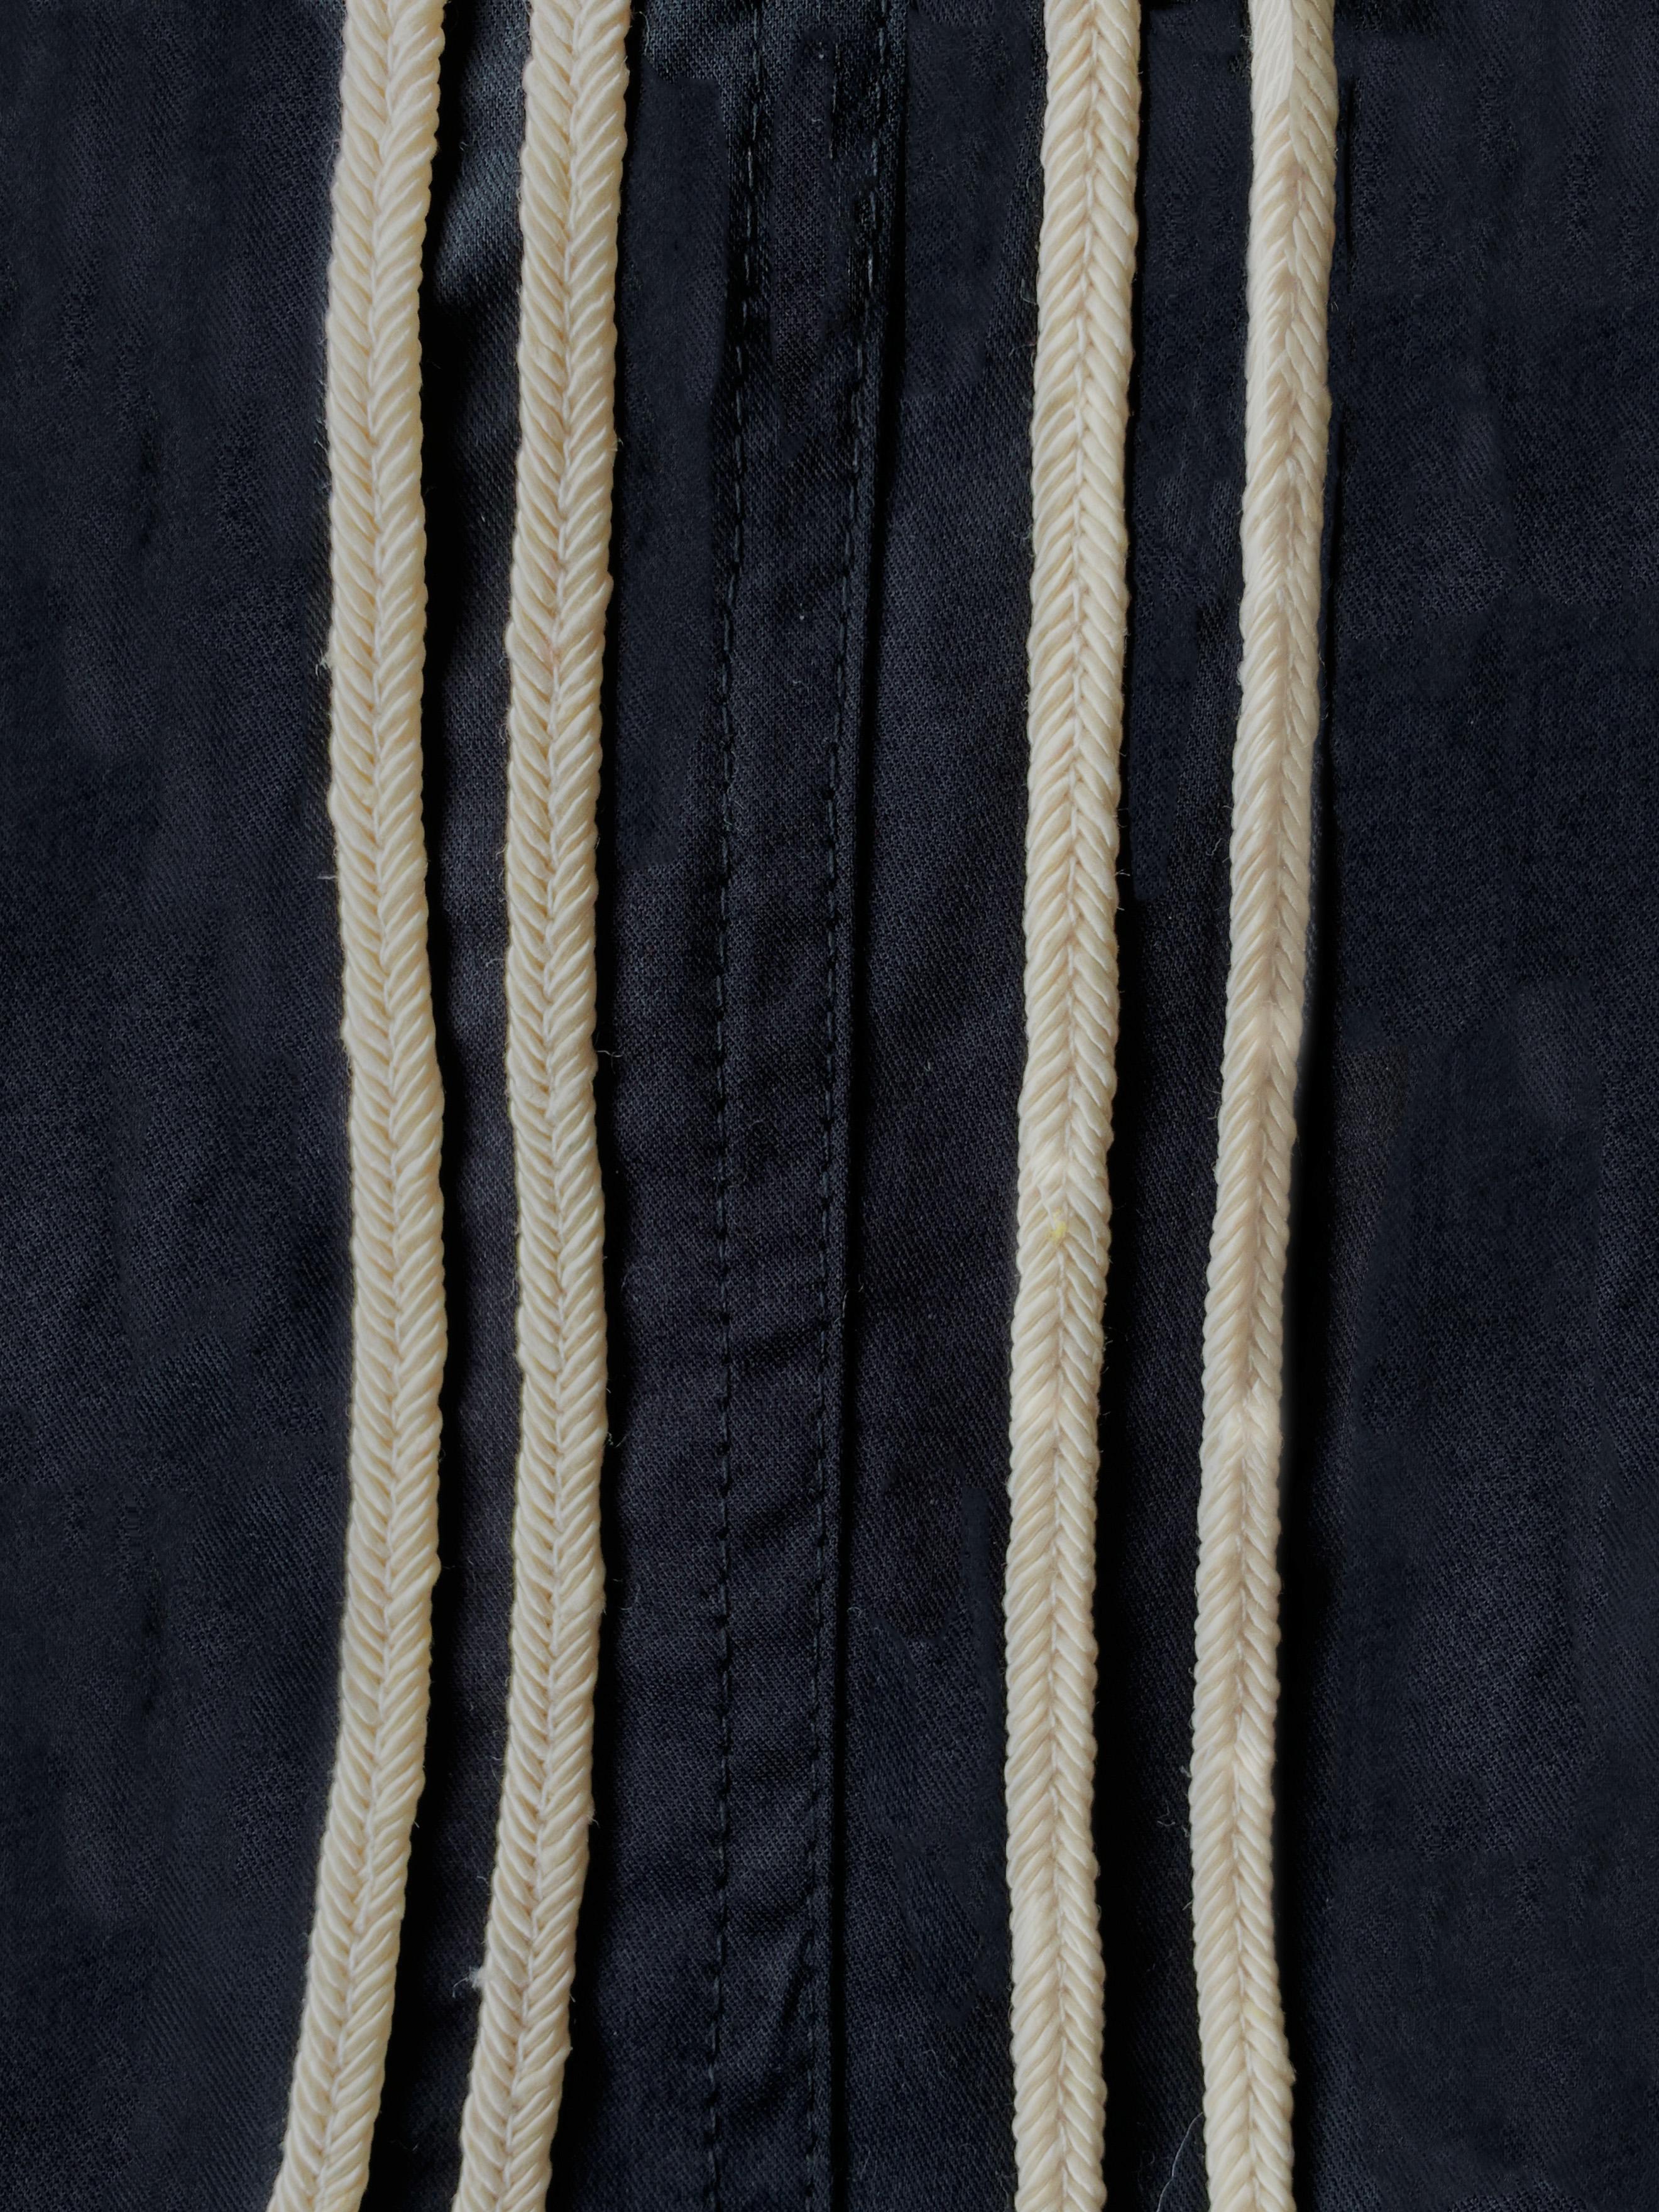 Braided Cord Shorts Black